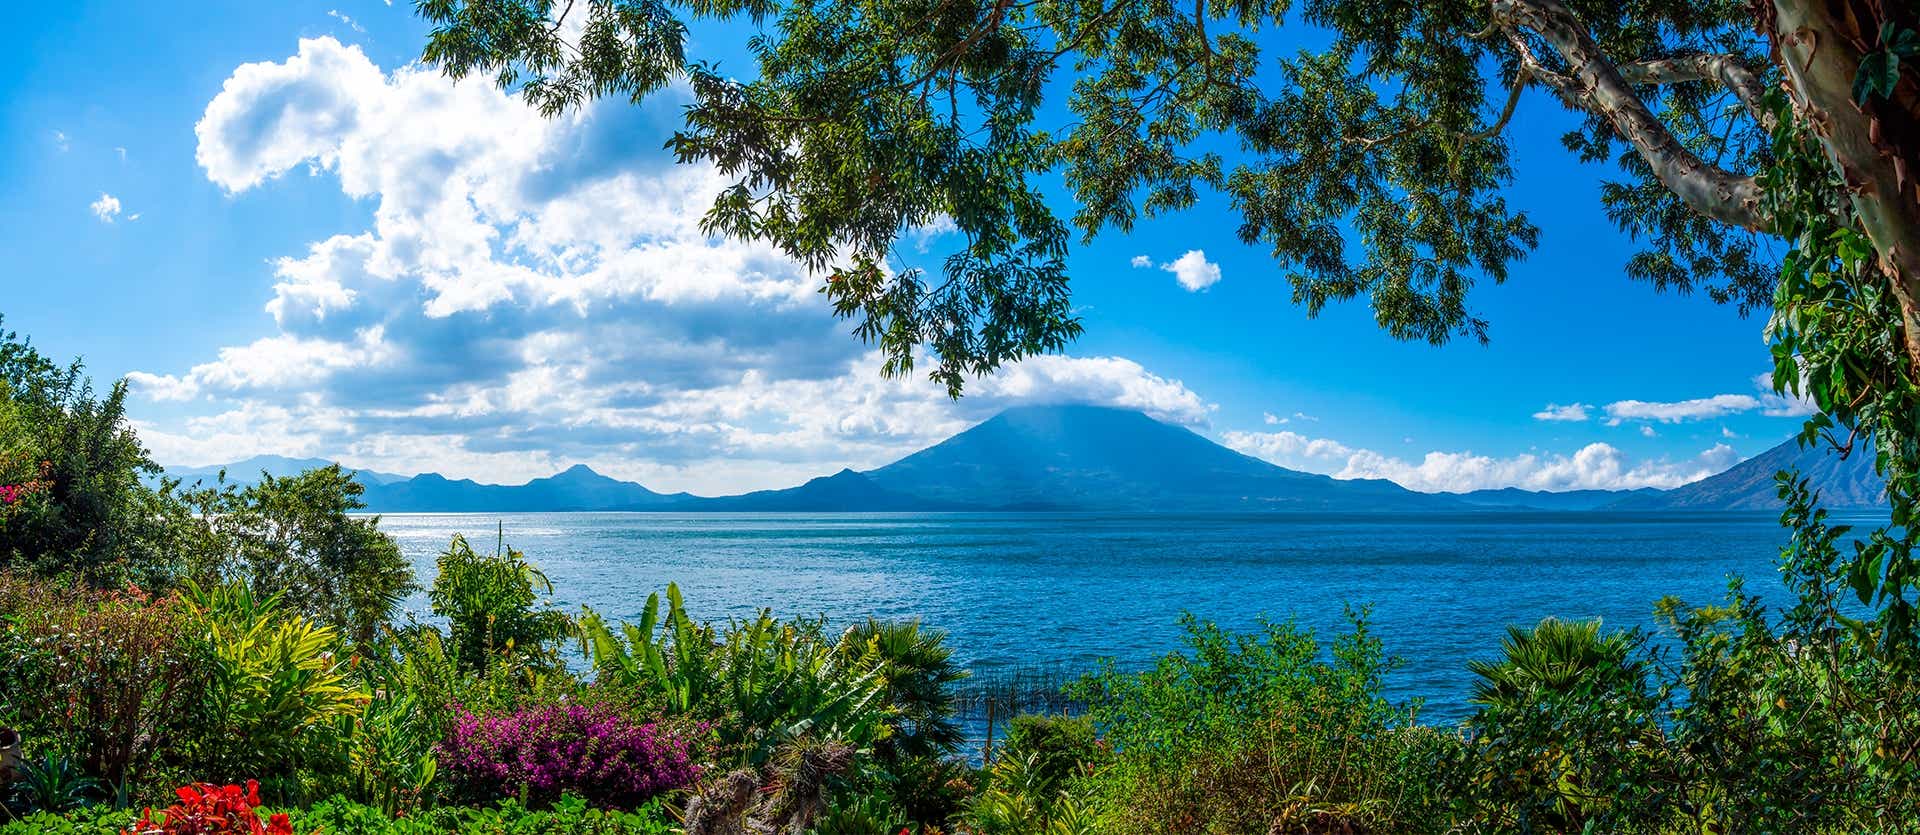 Lake Atitlan <span class="iconos separador"></span> Guatemala